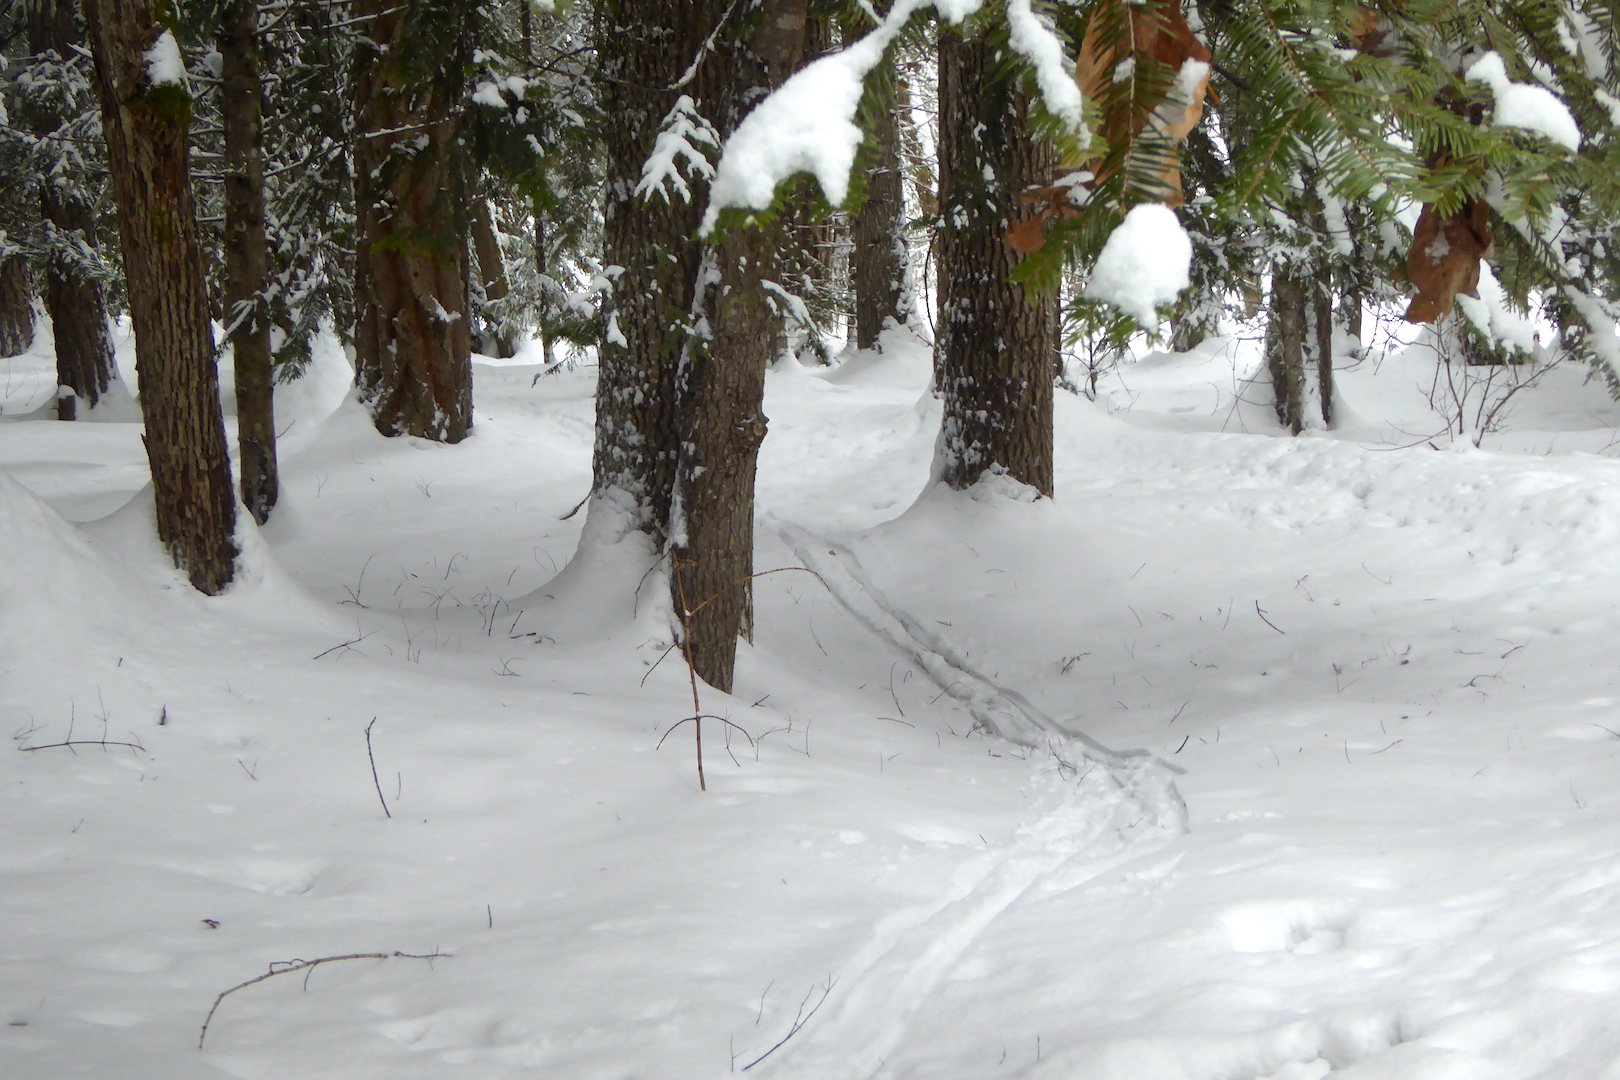 ski tracks through forest